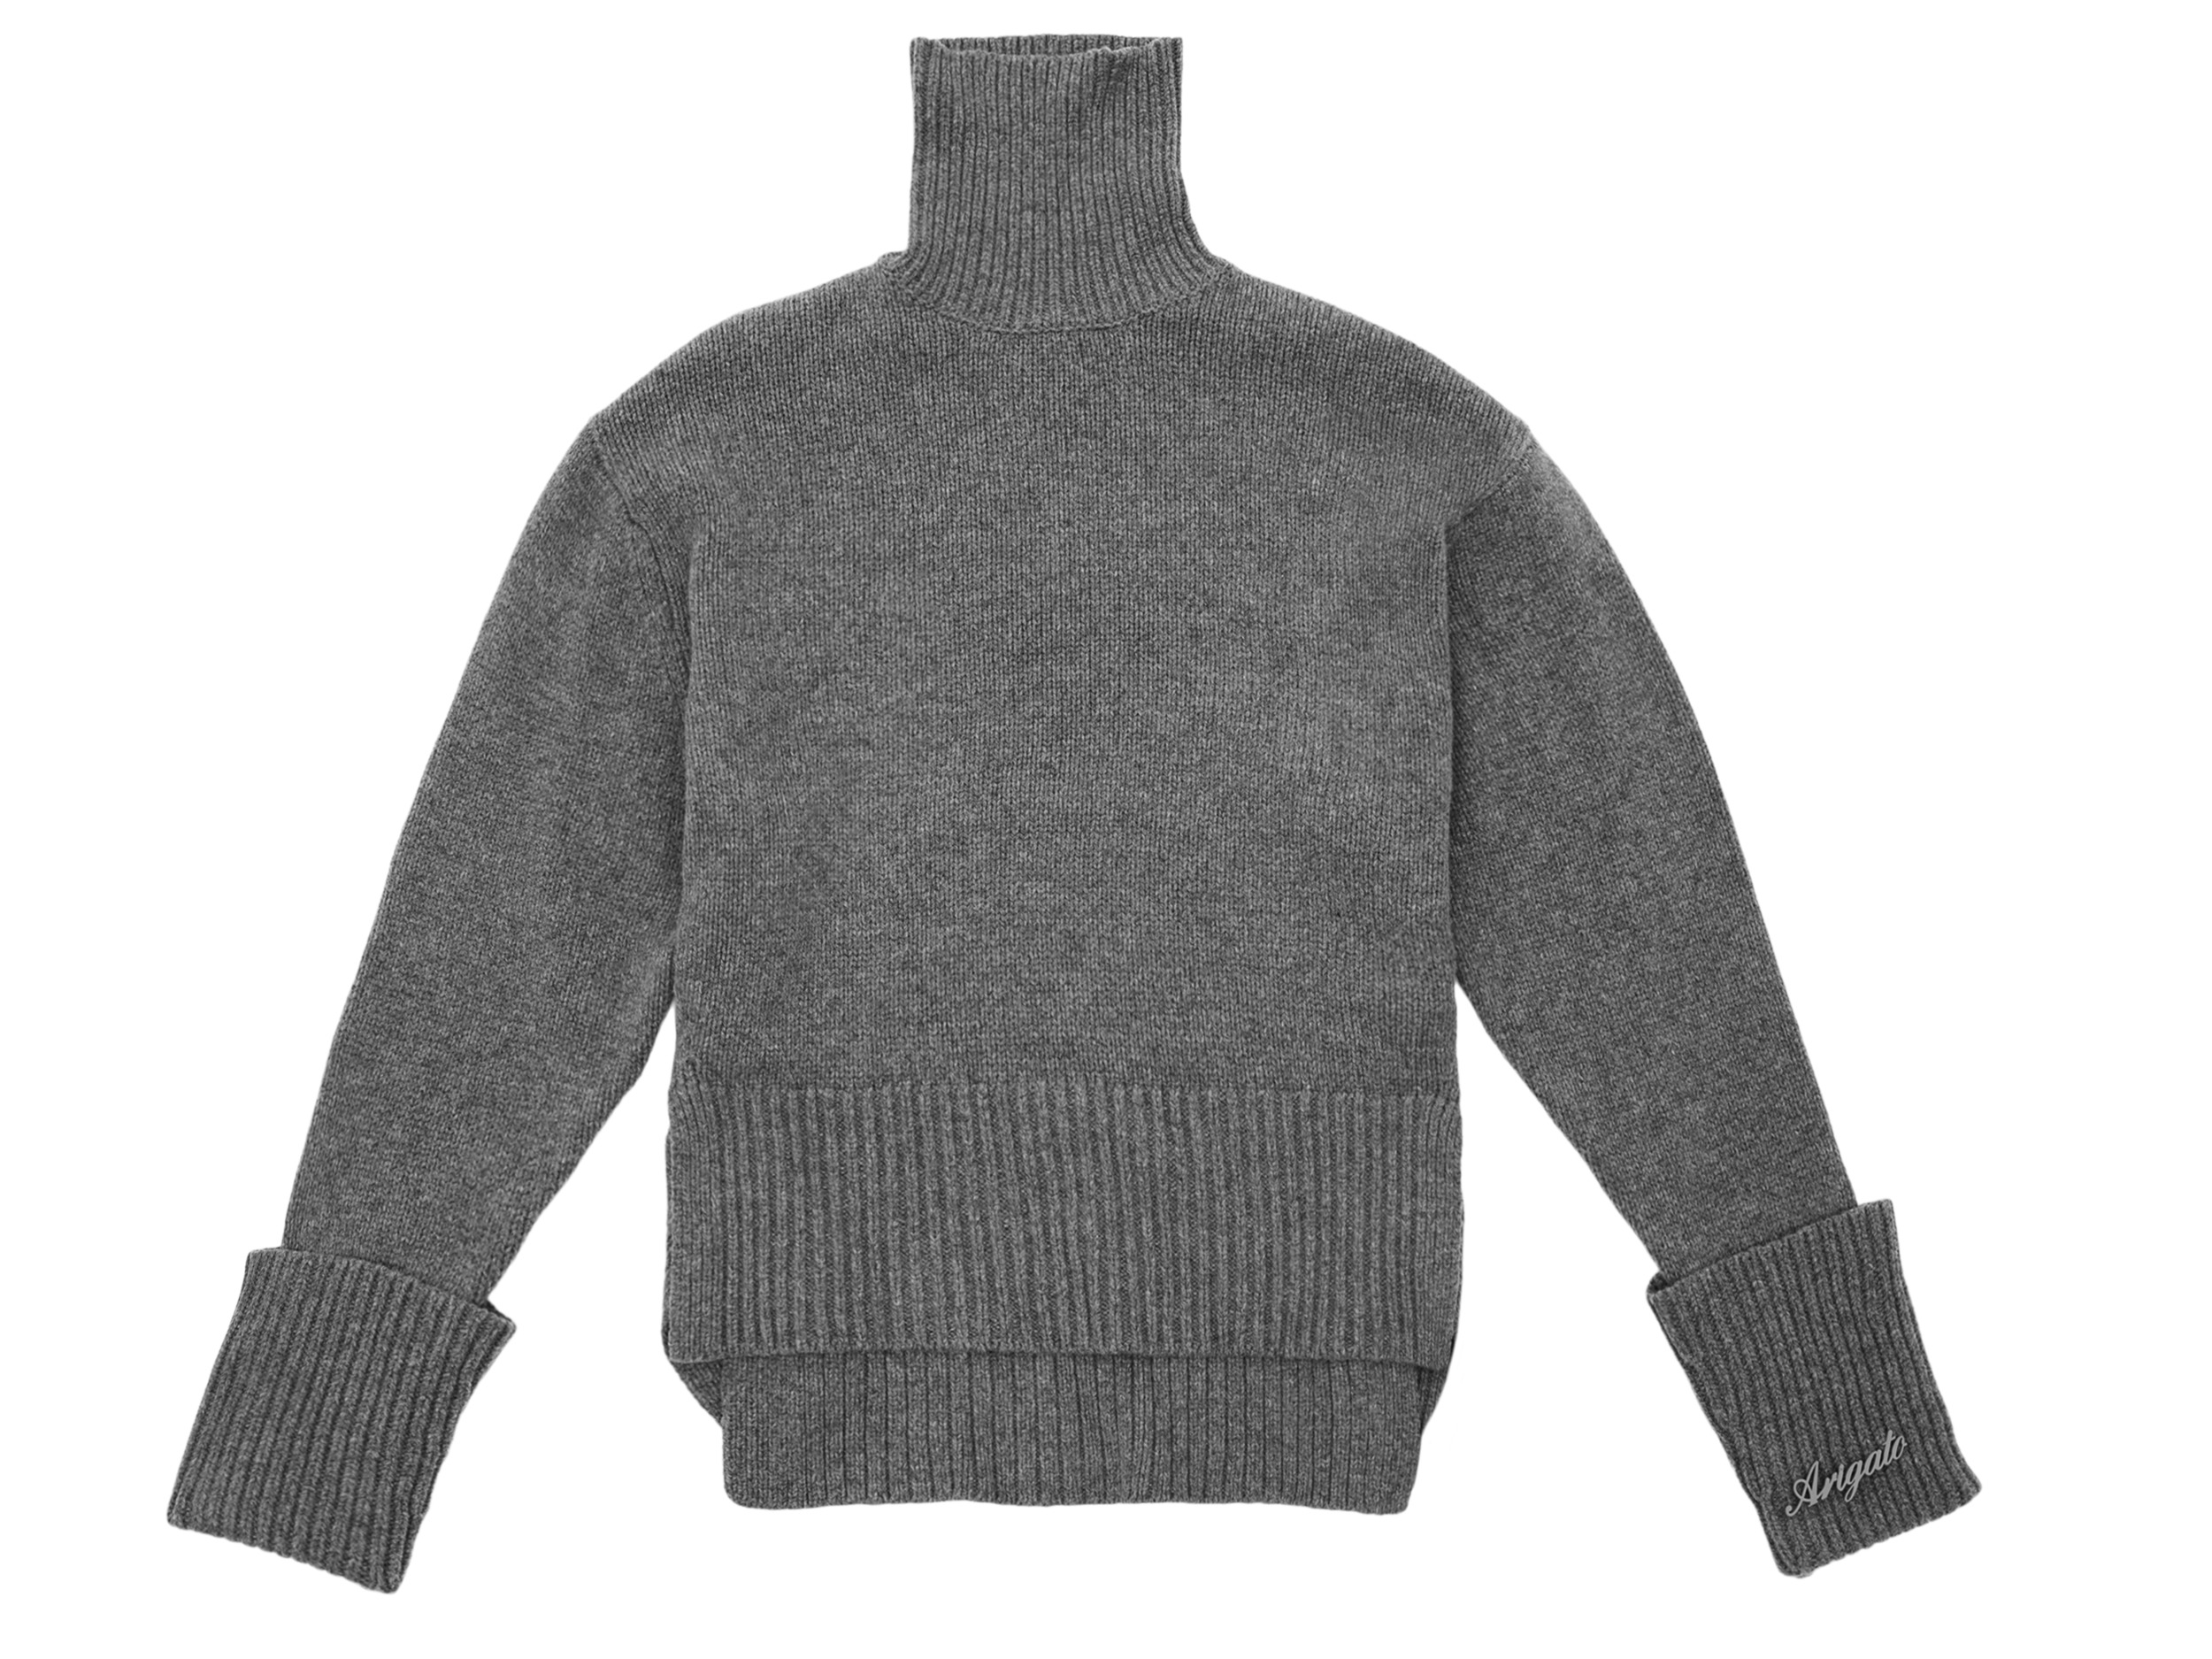 Remain Turtleneck Sweater - 1